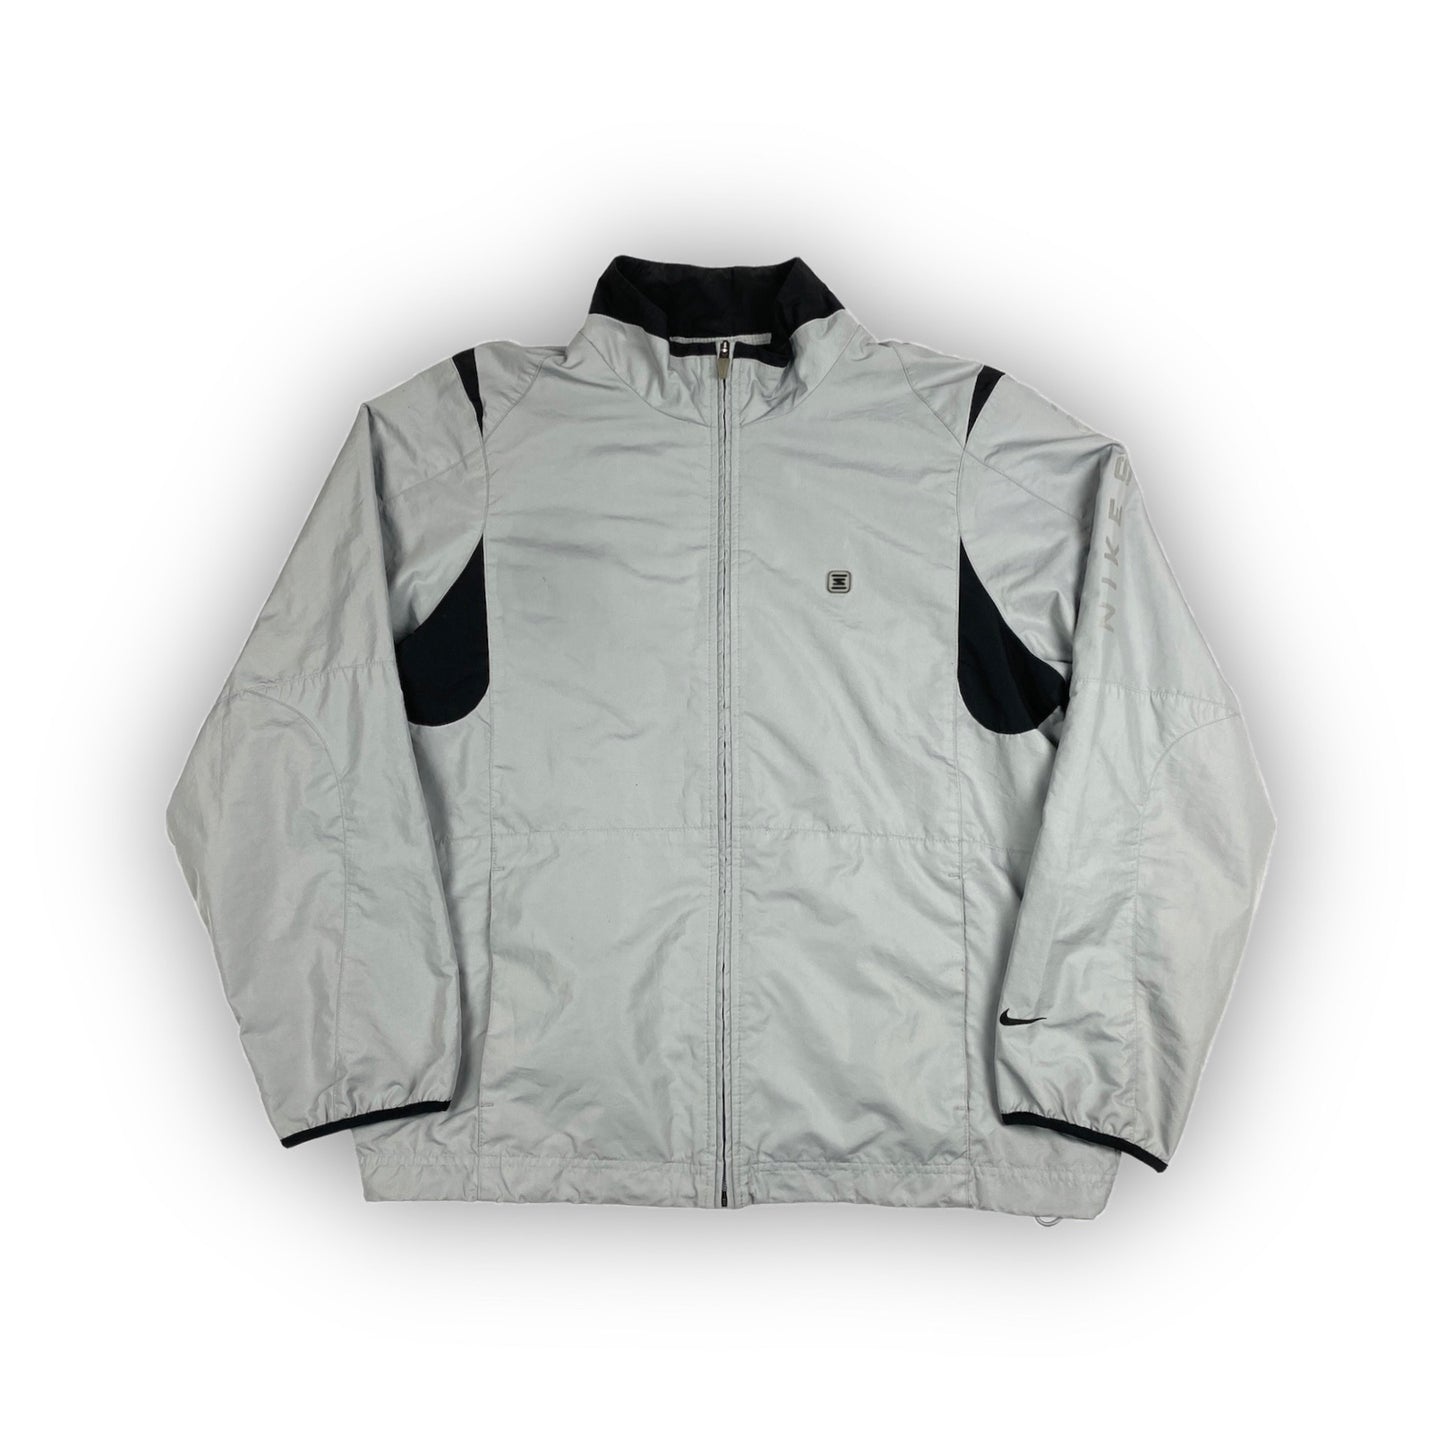 Vintage Nike SHOX track jacket